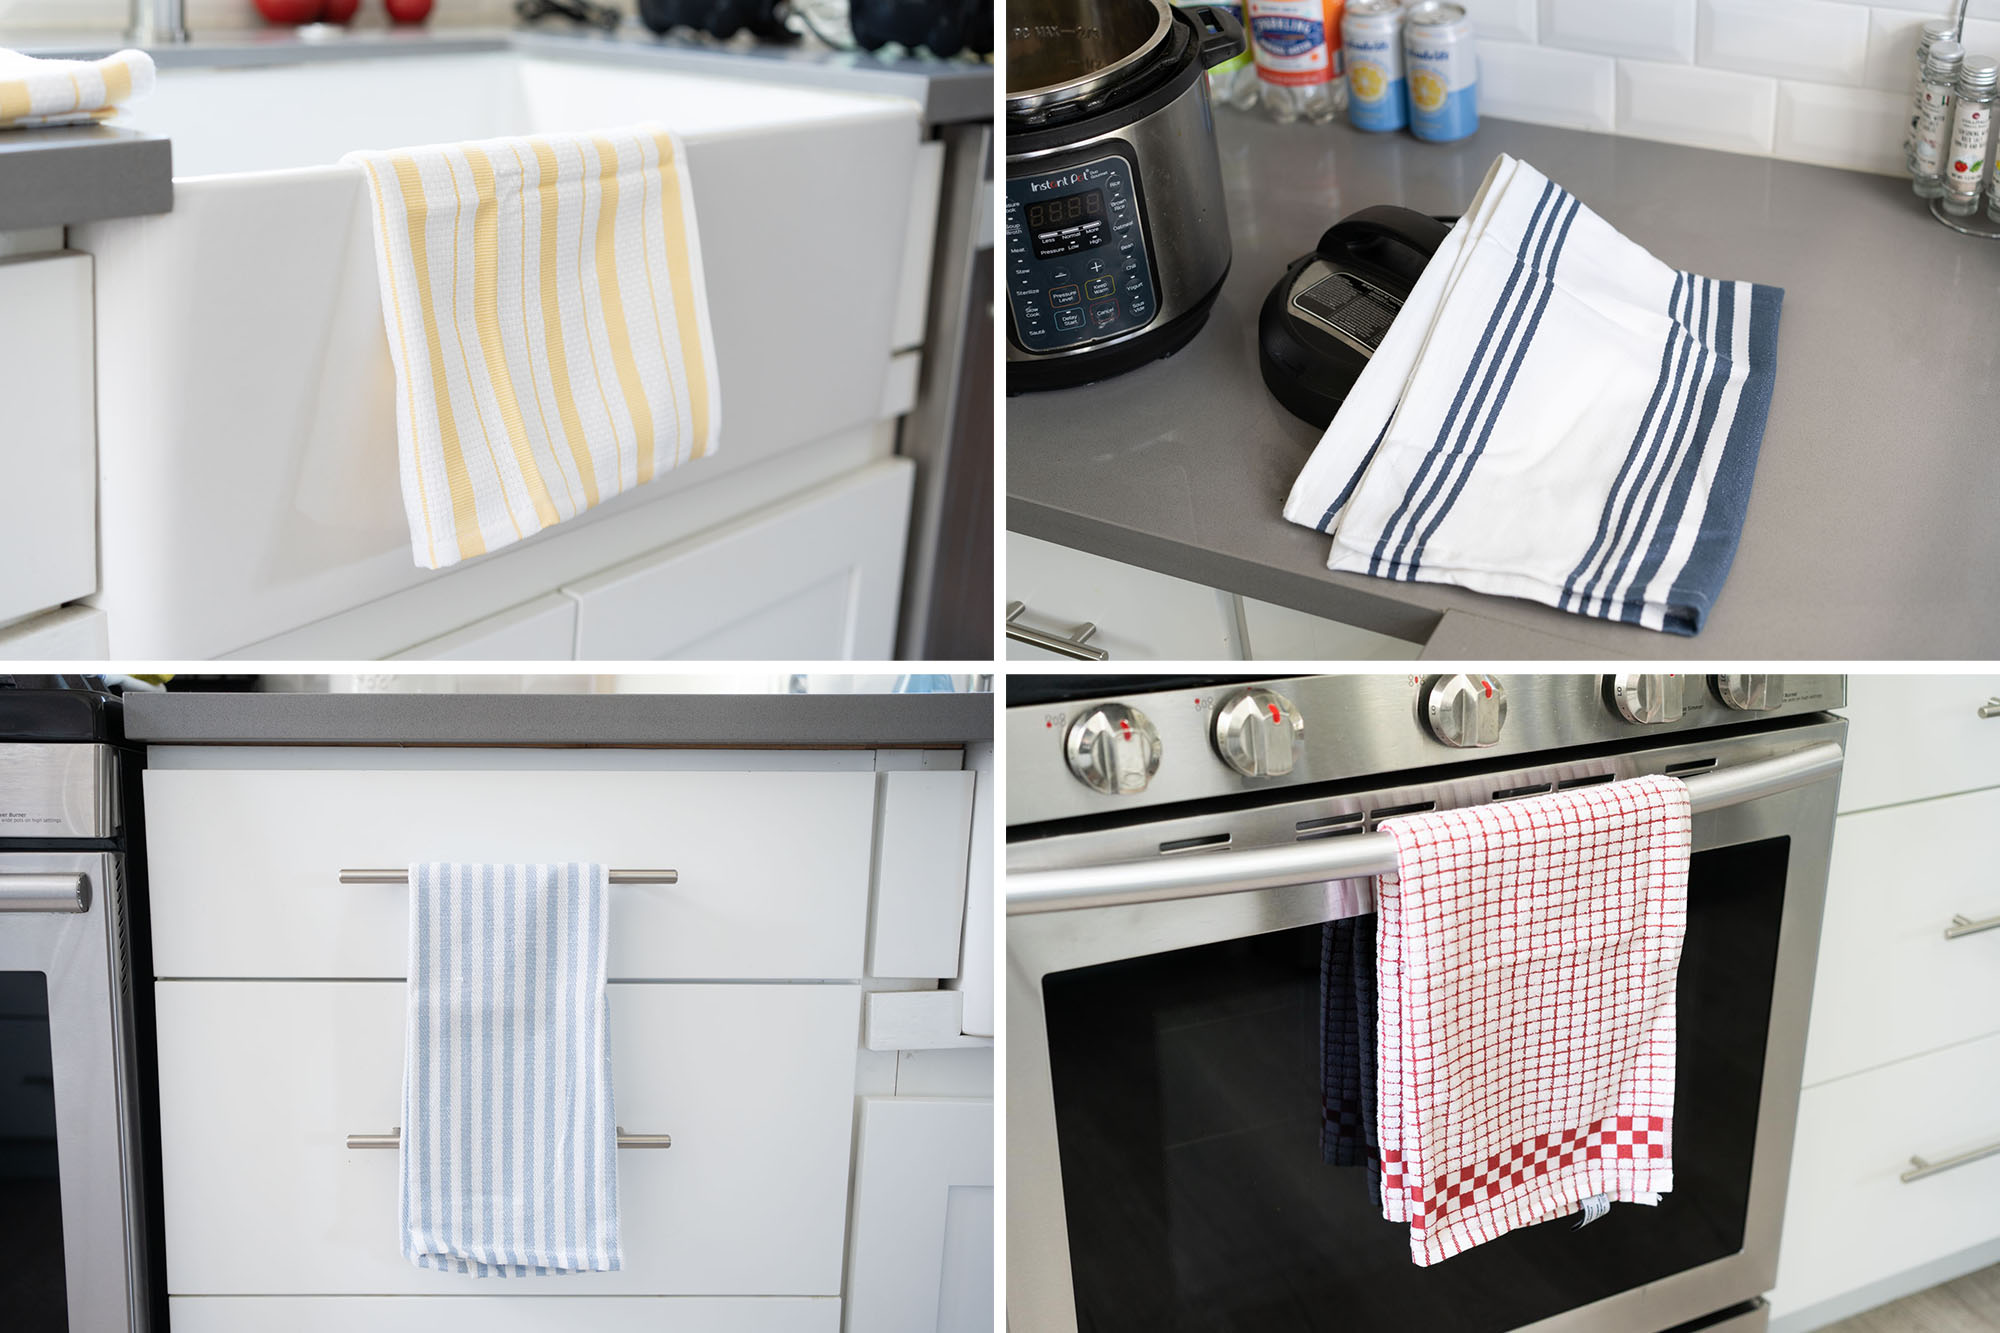 All-Clad Solid Kitchen Towel, Set of 2 - Black